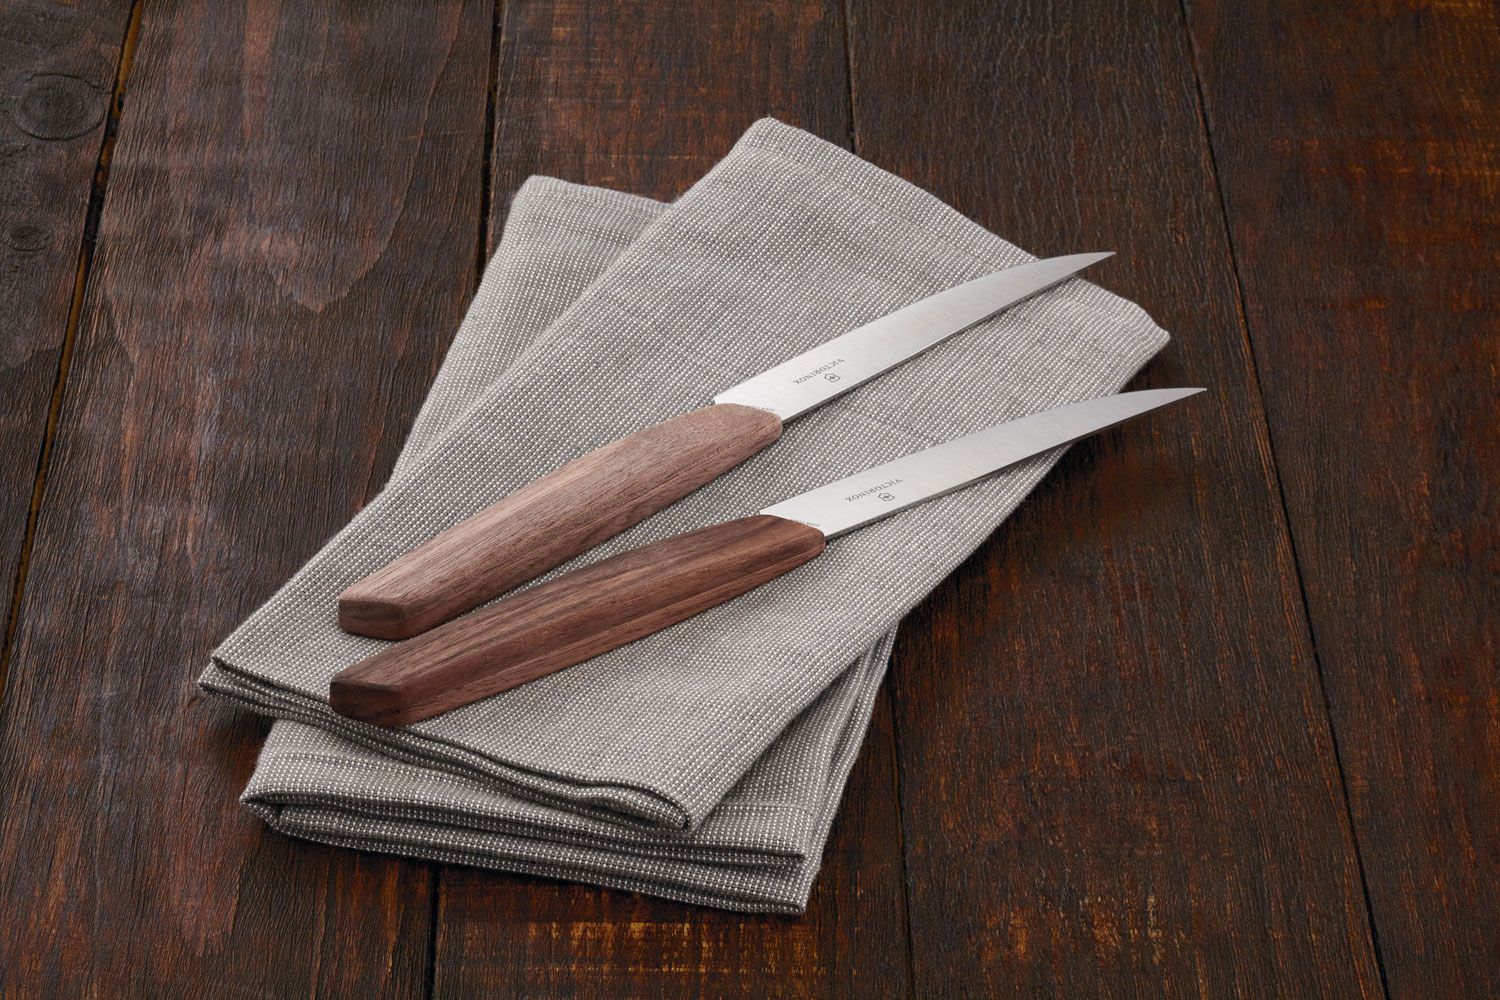 The Best Steak Knives: Victorinox Swiss Modern Steak Knives – Just Pick This